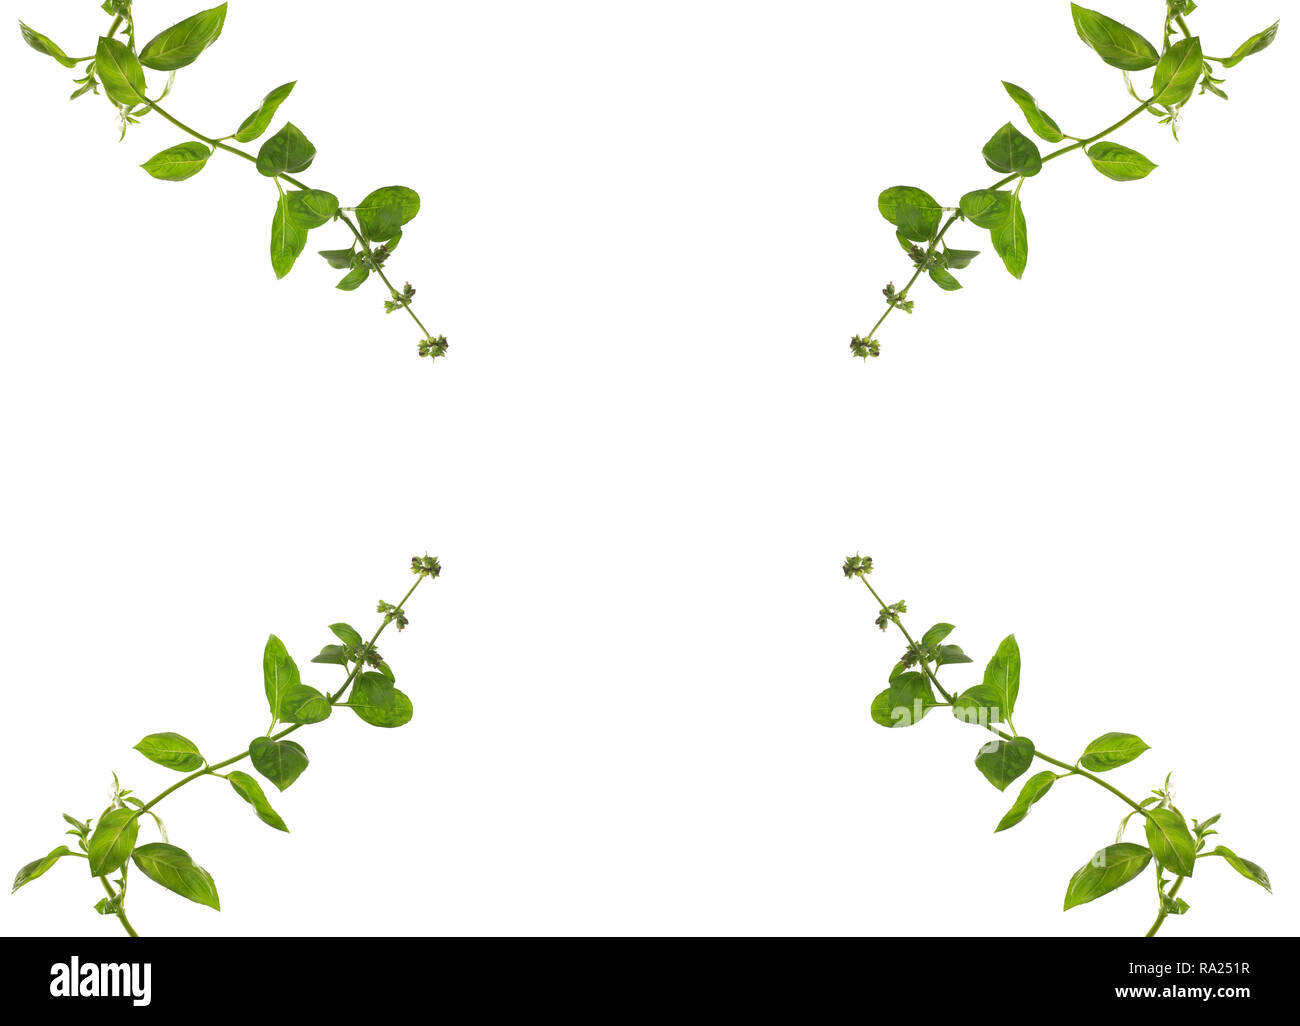 herb basil on white background Stock Photo